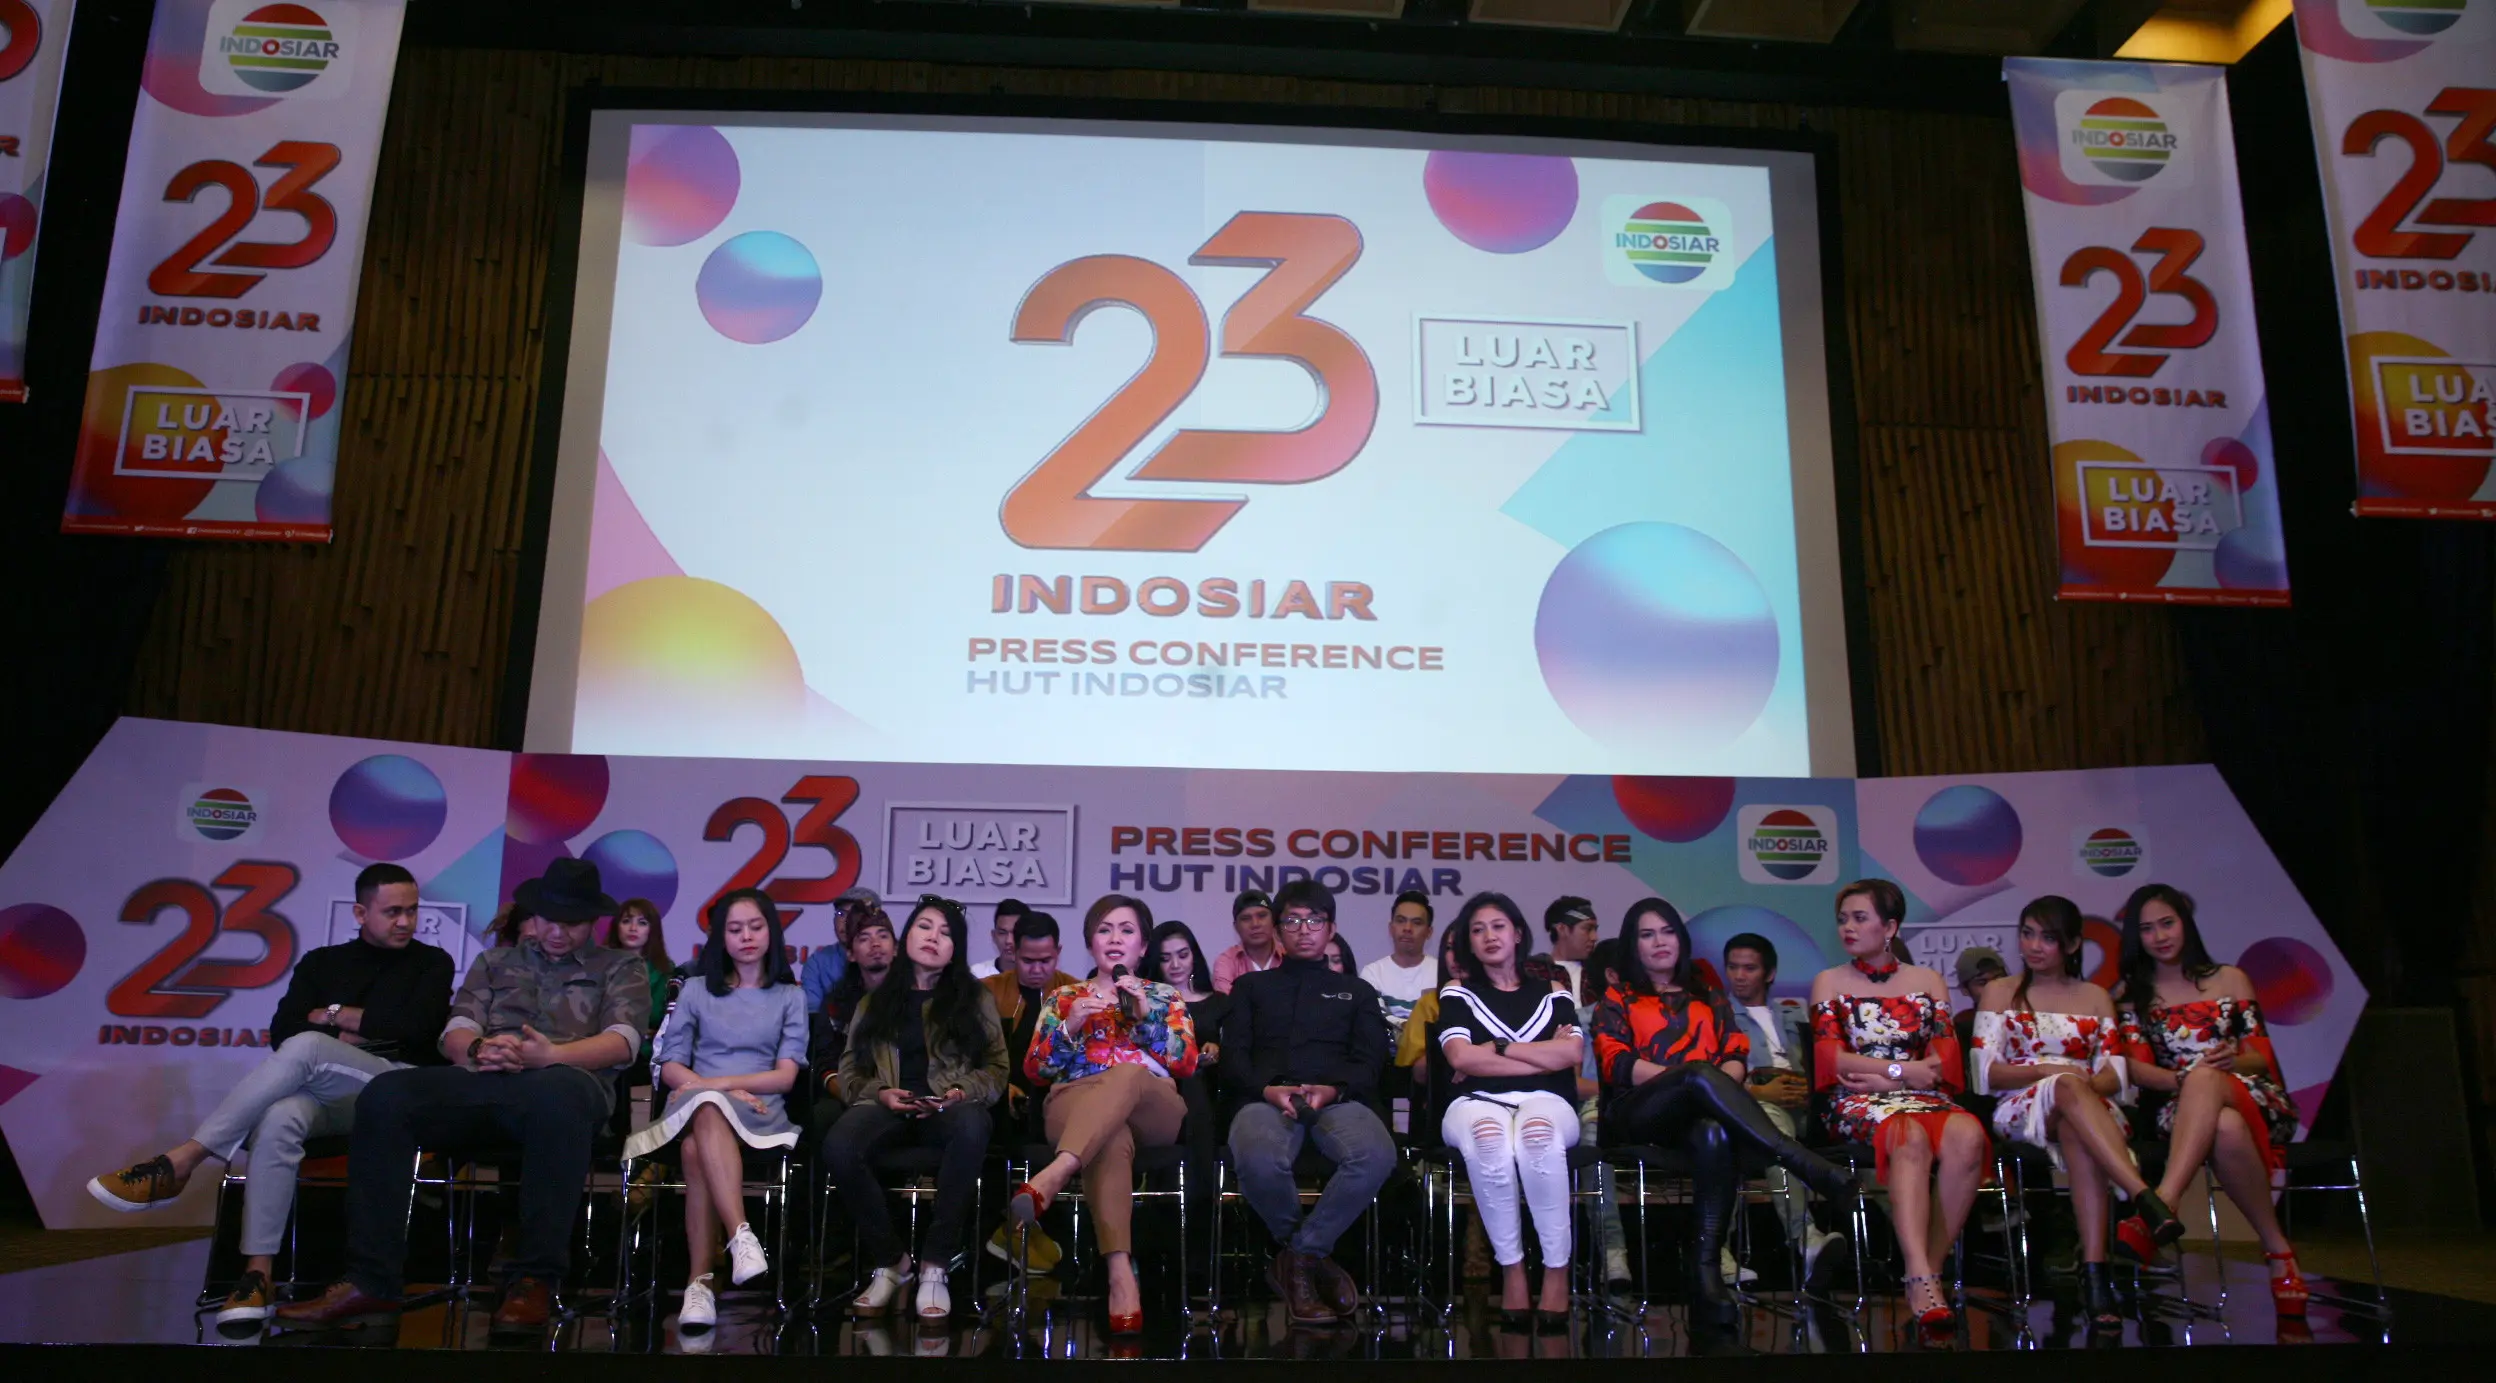 Preskon HUT Indosiar ke-23 (Nurwahyunan/Bintang.com)